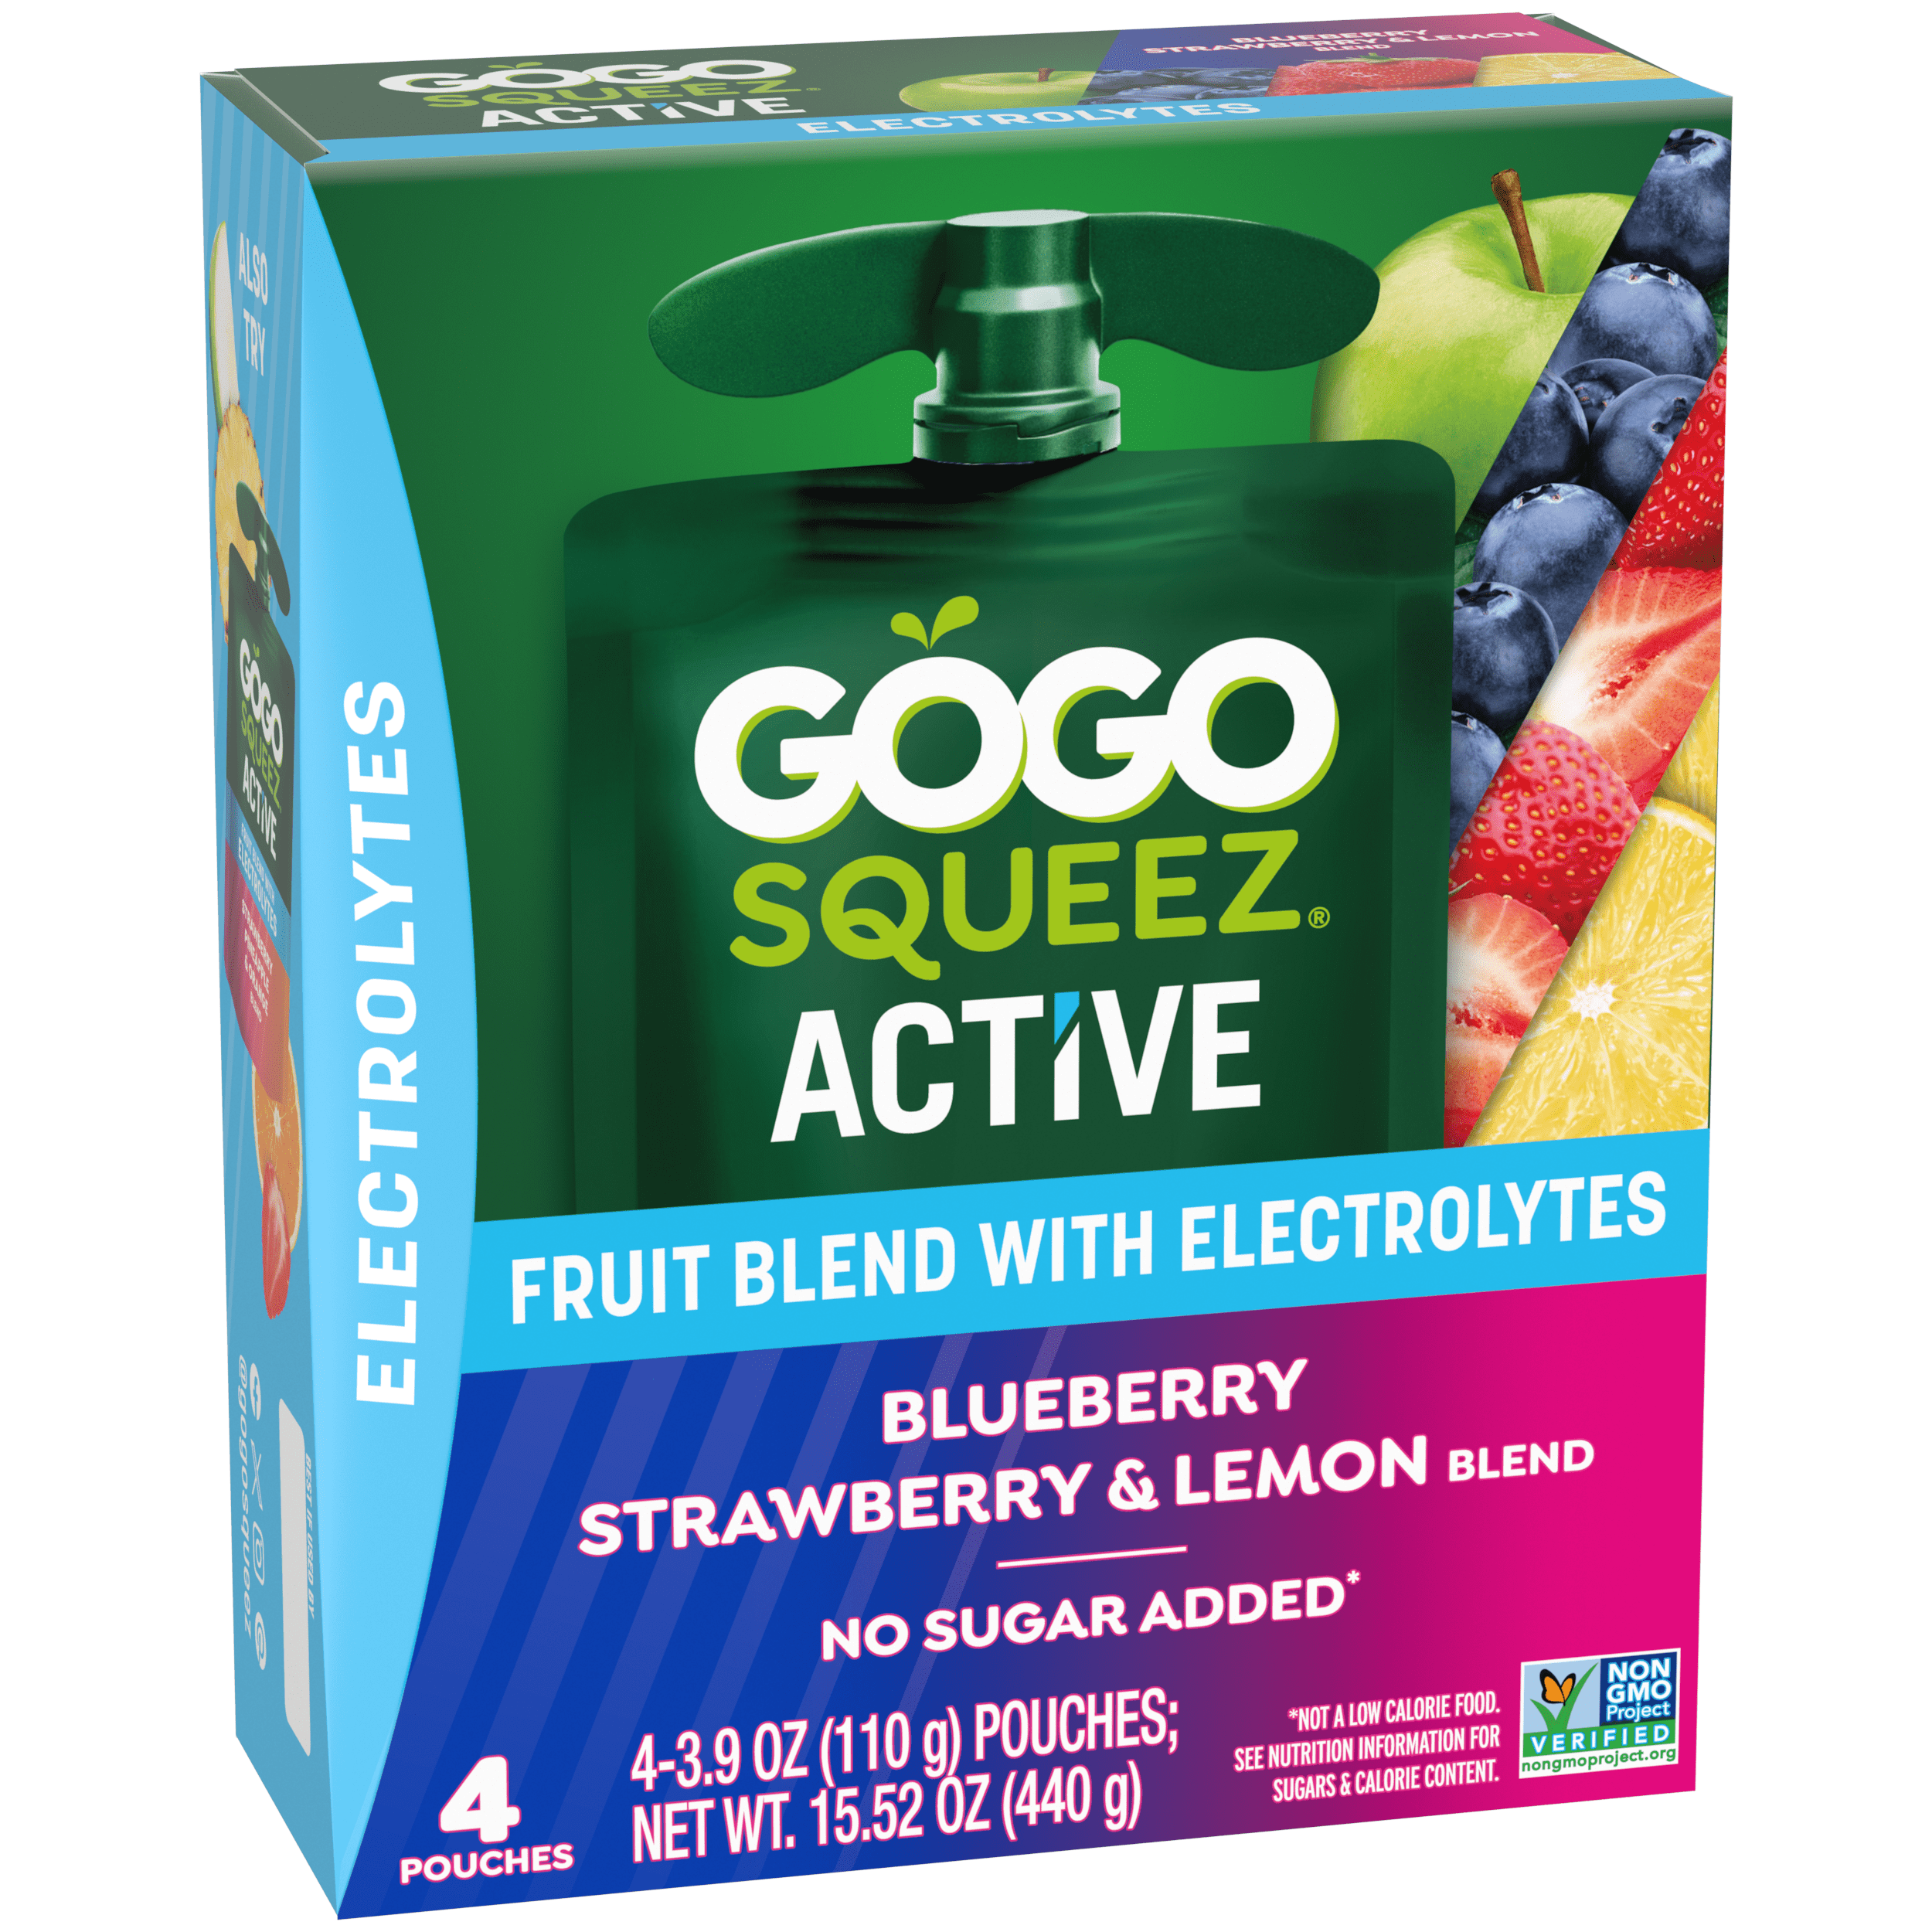 Gogo Squeez Active Fruit Blend With Electrolytes Blueberry, Strawberry & Lemon 4 pack Product Box